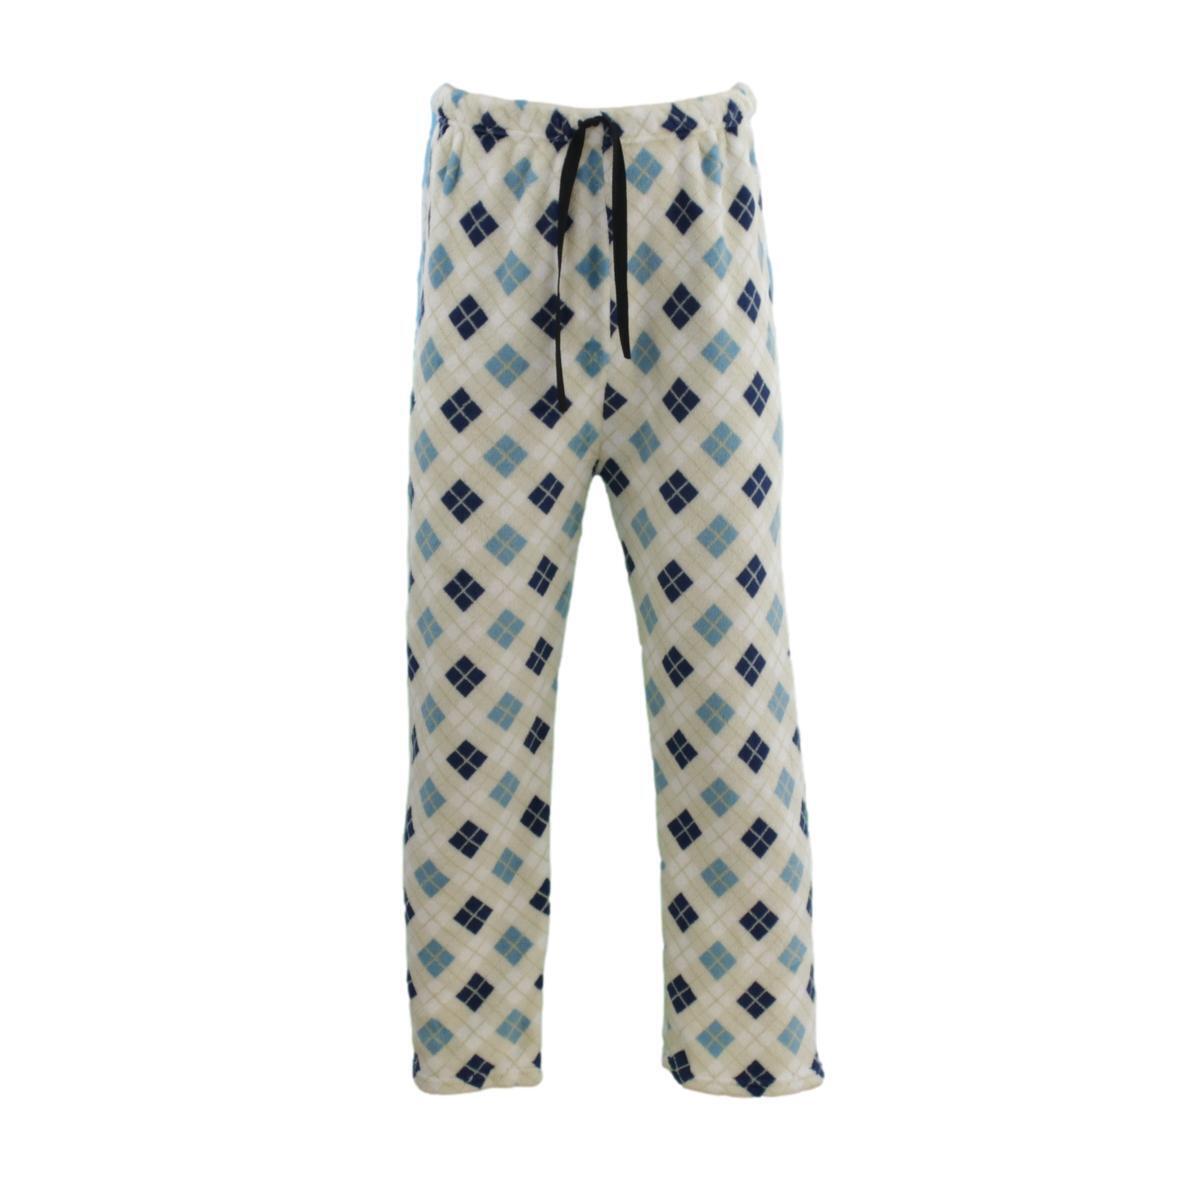 Men’s Soft Plush Lounge Sleep Pyjama Pajama Pants Fleece Winter Sleepwear